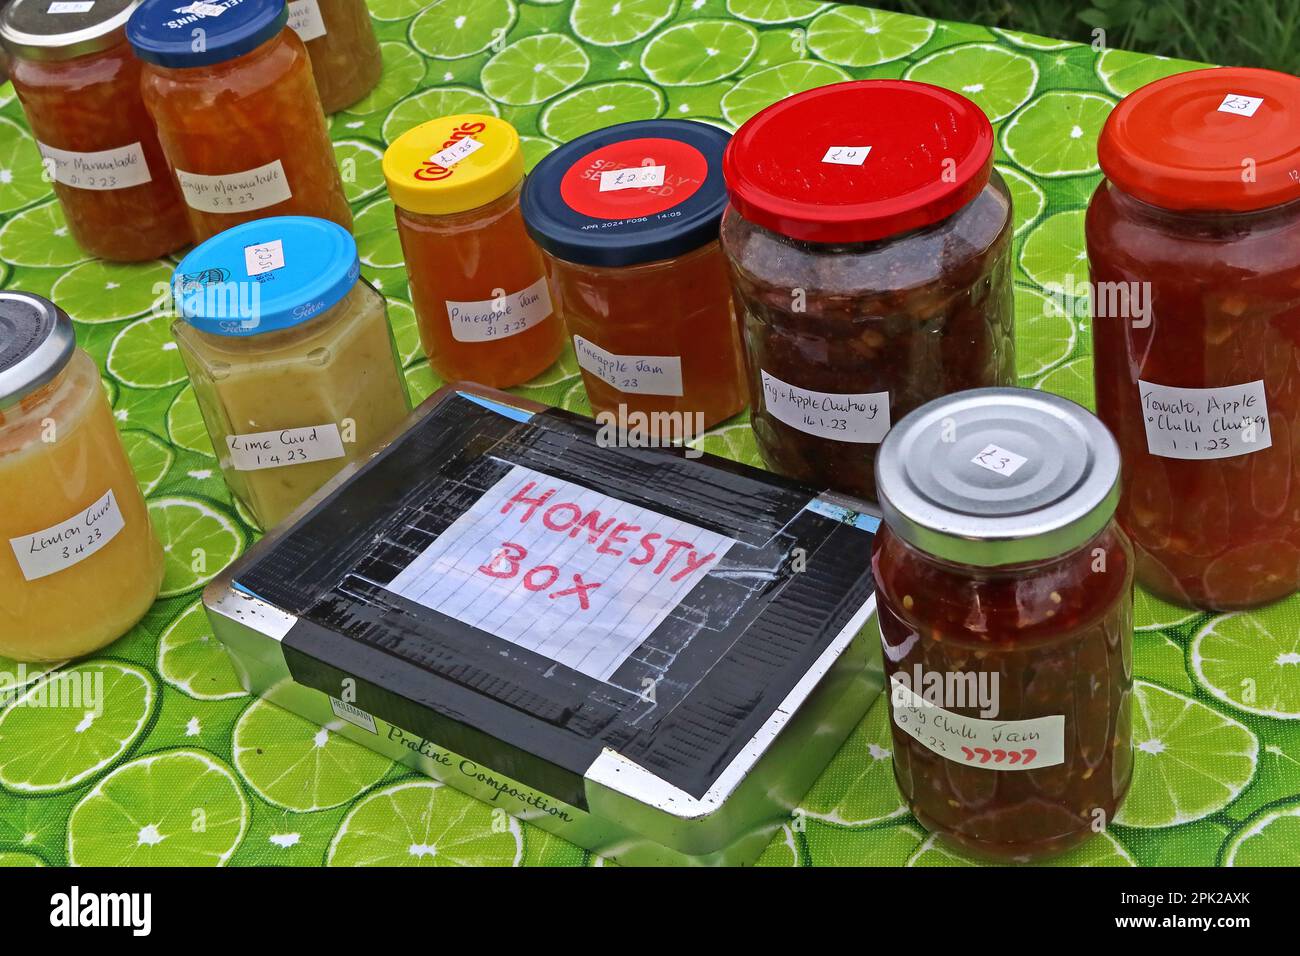 Homemade preserves for sale - Charity jam and chutney Honesty box, Warrington, Cheshire, England, UK, WA4 Stock Photo